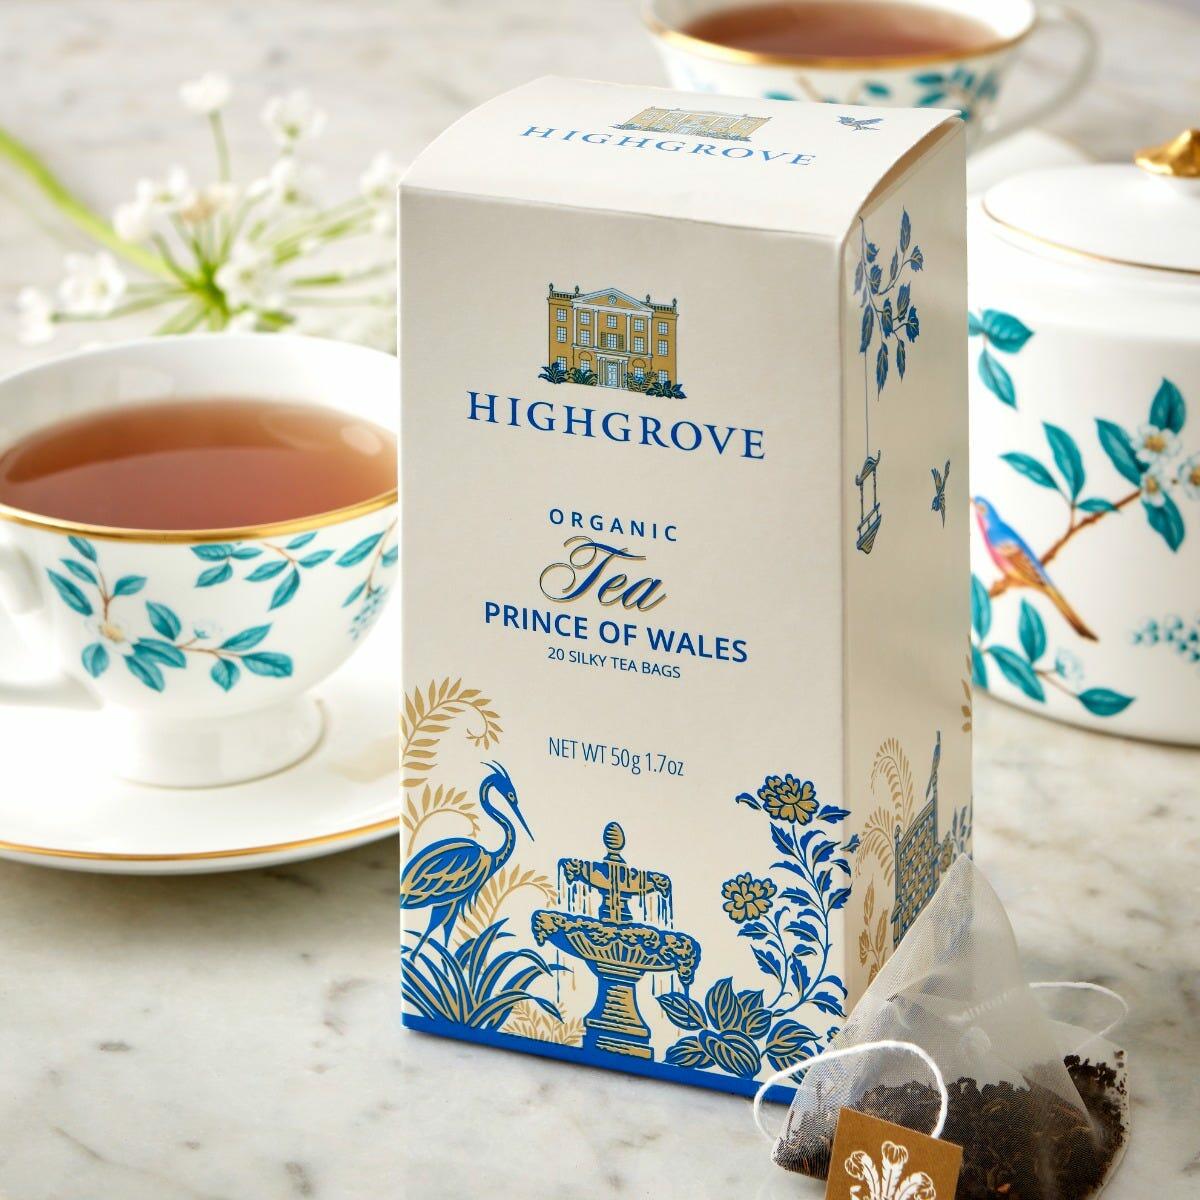 Organic Prince of Wales, Silky Tea Bags, Highgrove